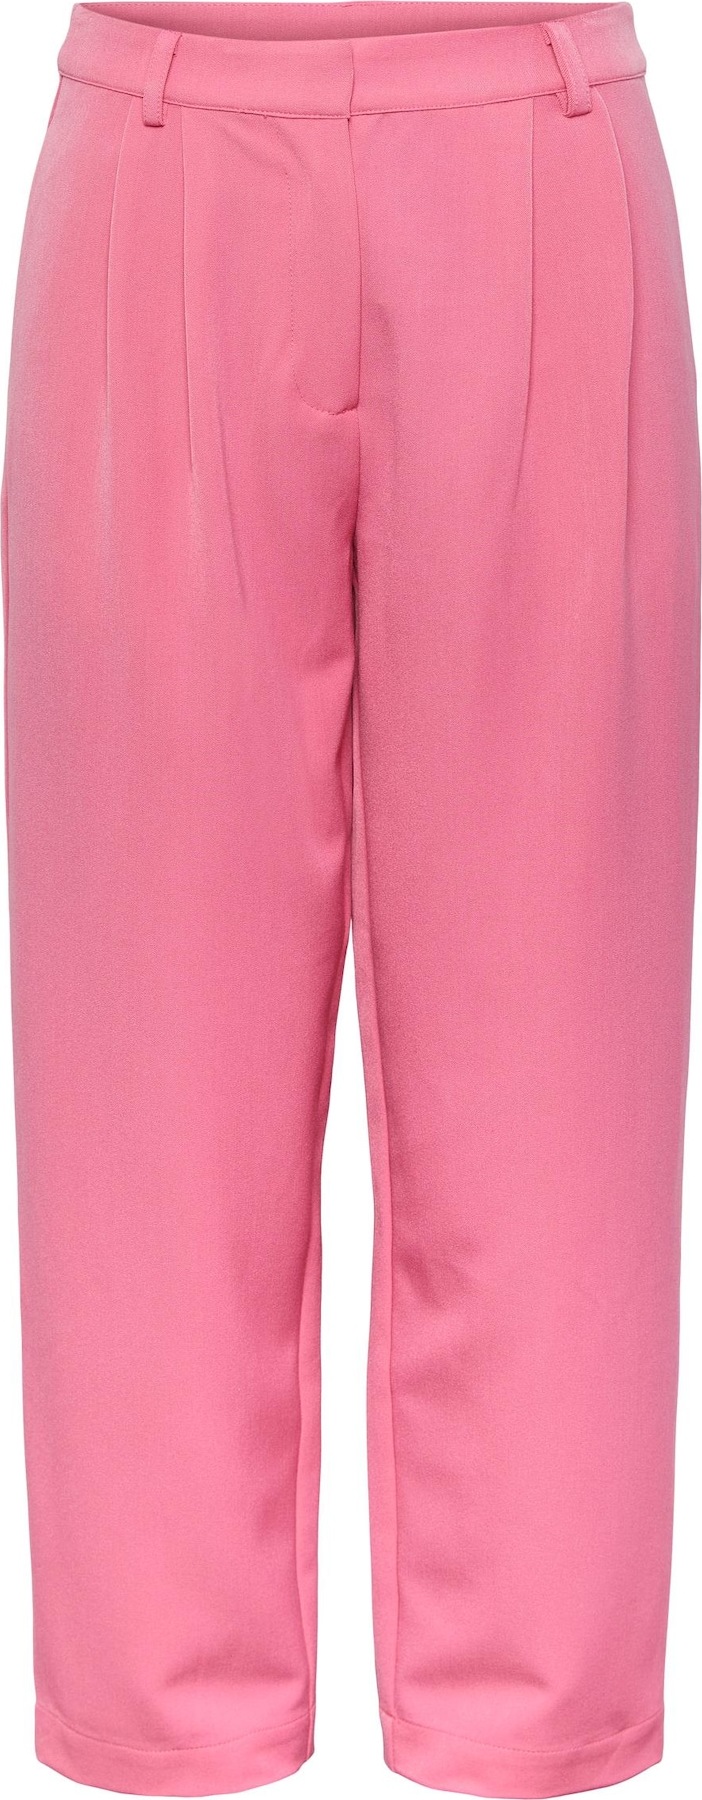 Y.A.S Kalhoty se sklady v pase pink